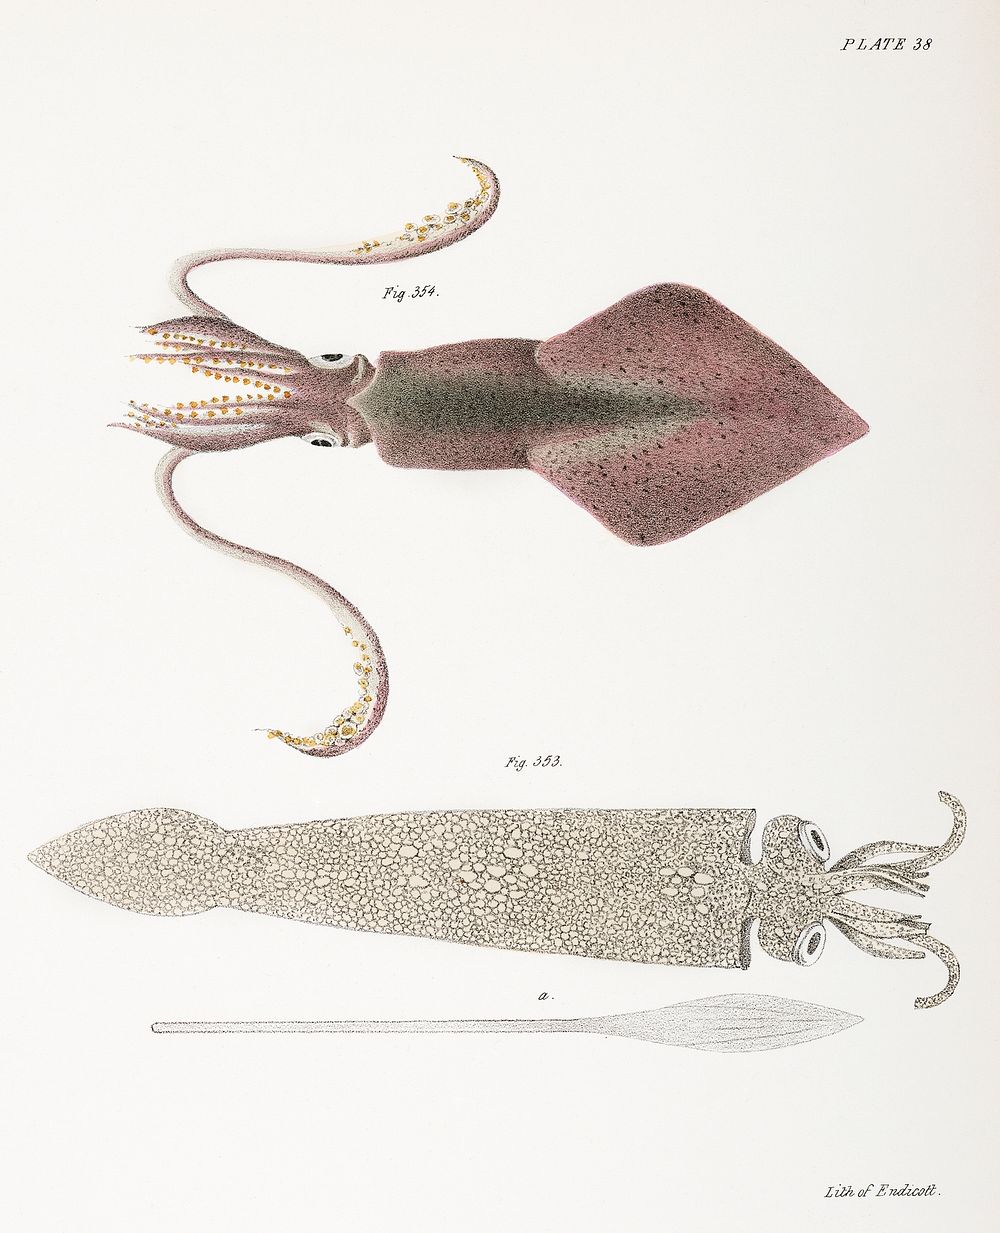 353. Glass squid (Loligo pavo) 354. Longfin inshore squid (Loligo pealii) illustration from Zoology of New York…